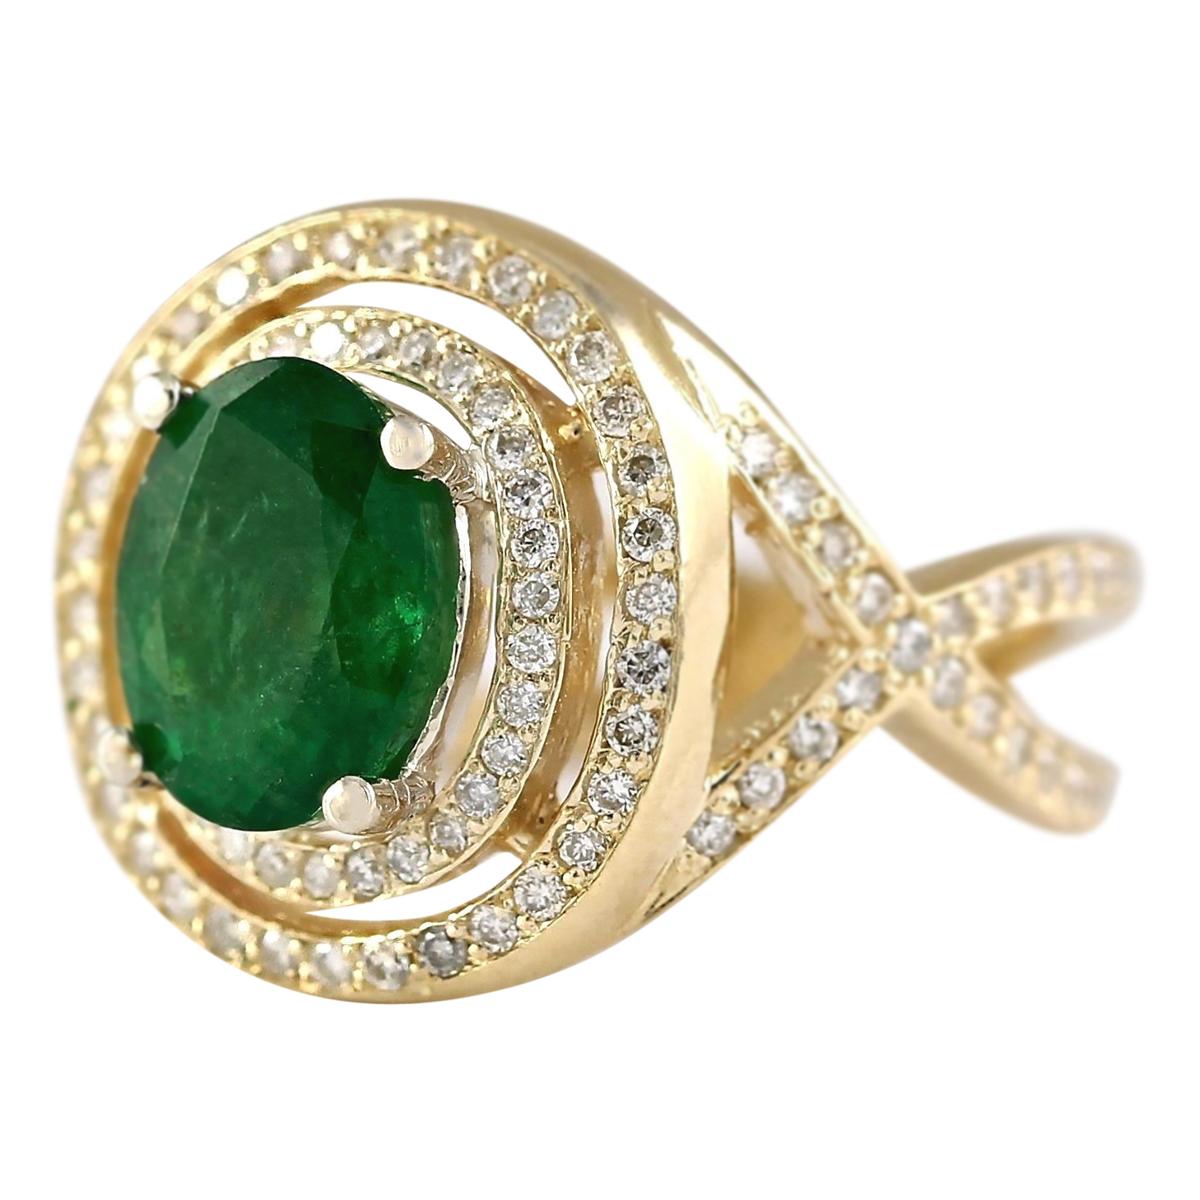 3.63 Carat Natural Emerald 14 Karat Yellow Gold Diamond Ring
Stamped: 14K Yellow Gold
Total Ring Weight: 9.2 Grams
Natural Emerald Weight is 2.38 Carat (Measures: 9.00x7.00 mm)
Color: Green
Total Natural Diamond Weight is 1.25 Carat
Color: F-G,